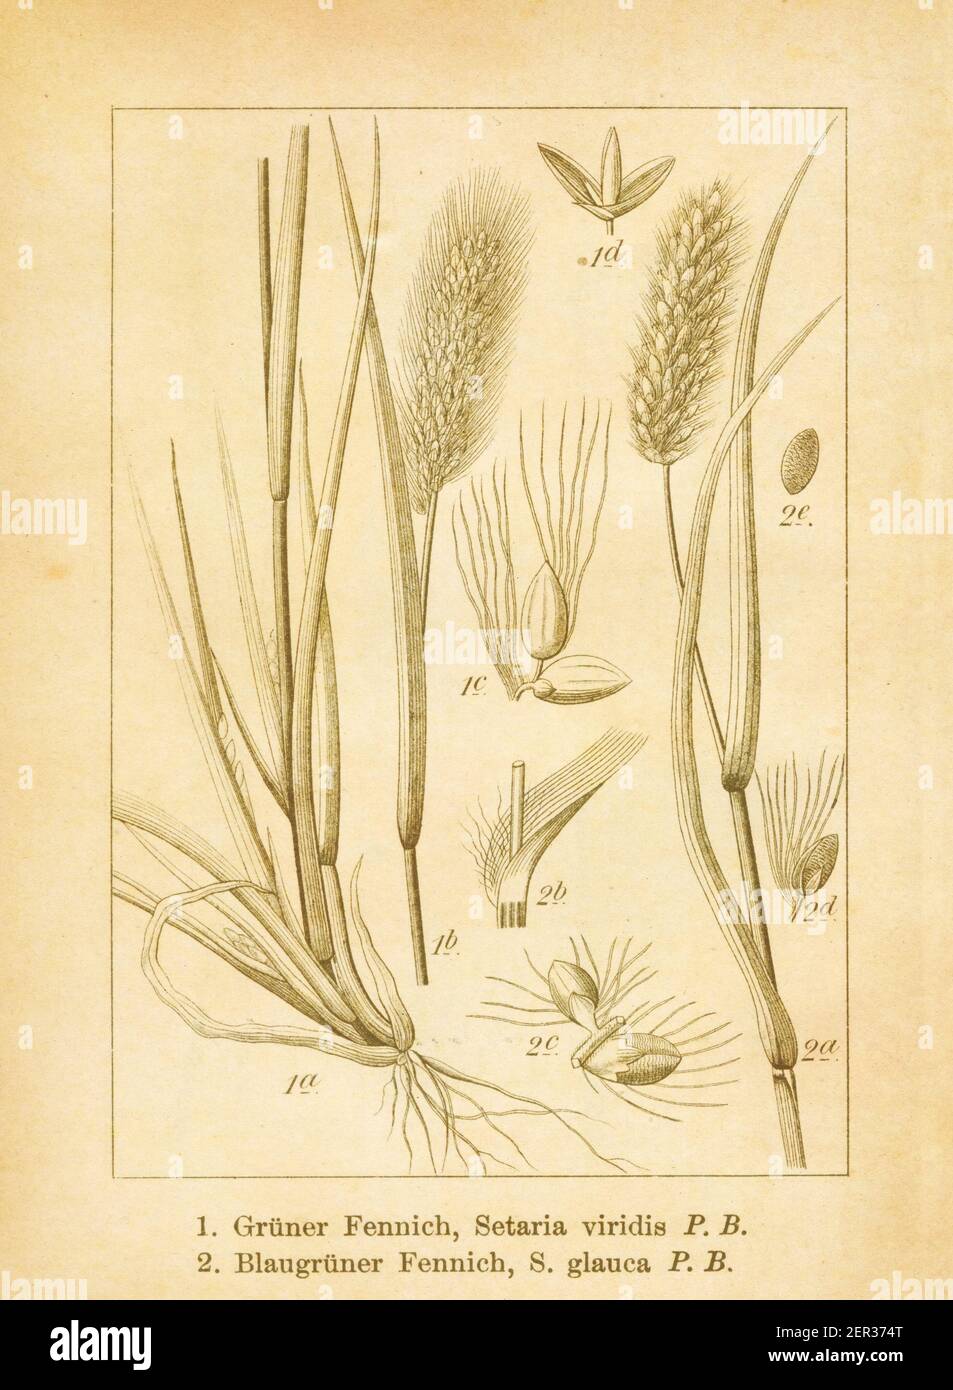 Antique illustration of a setaria viridis (also known as green bristlegrass or green foxtail) and setaria glauca (also known as pennisetum glaucum or Stock Photo